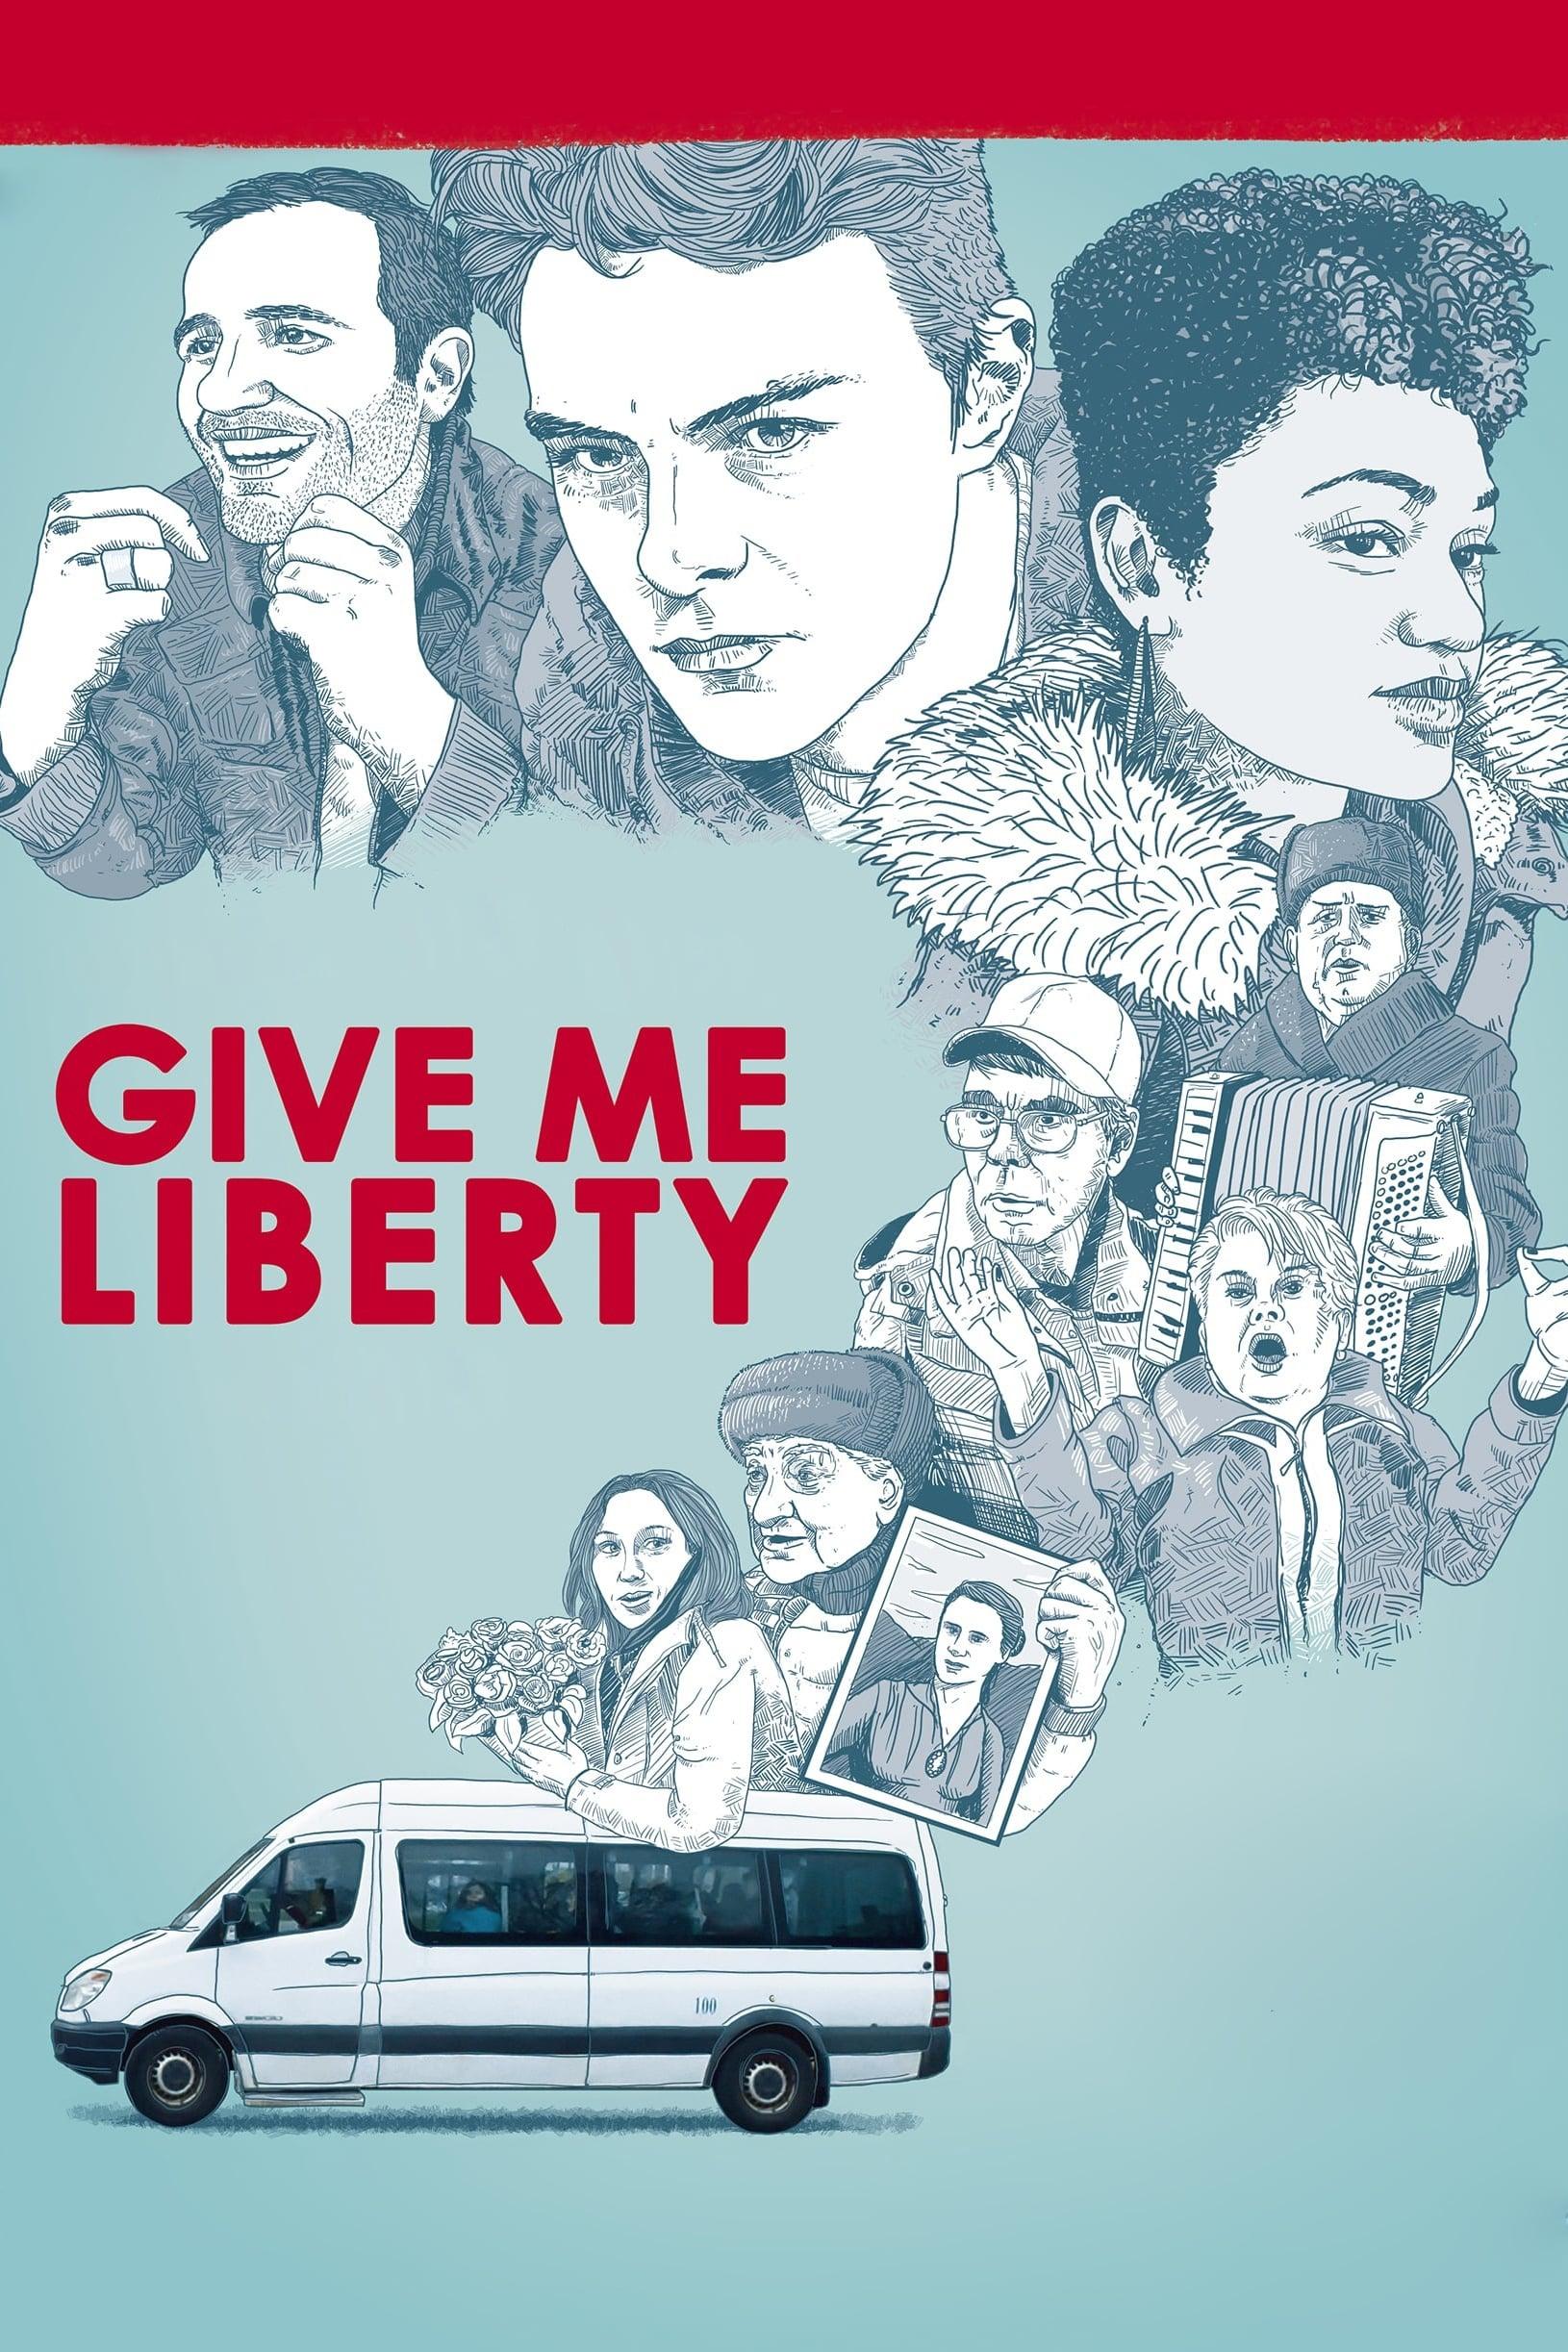 Give Me Liberty poster